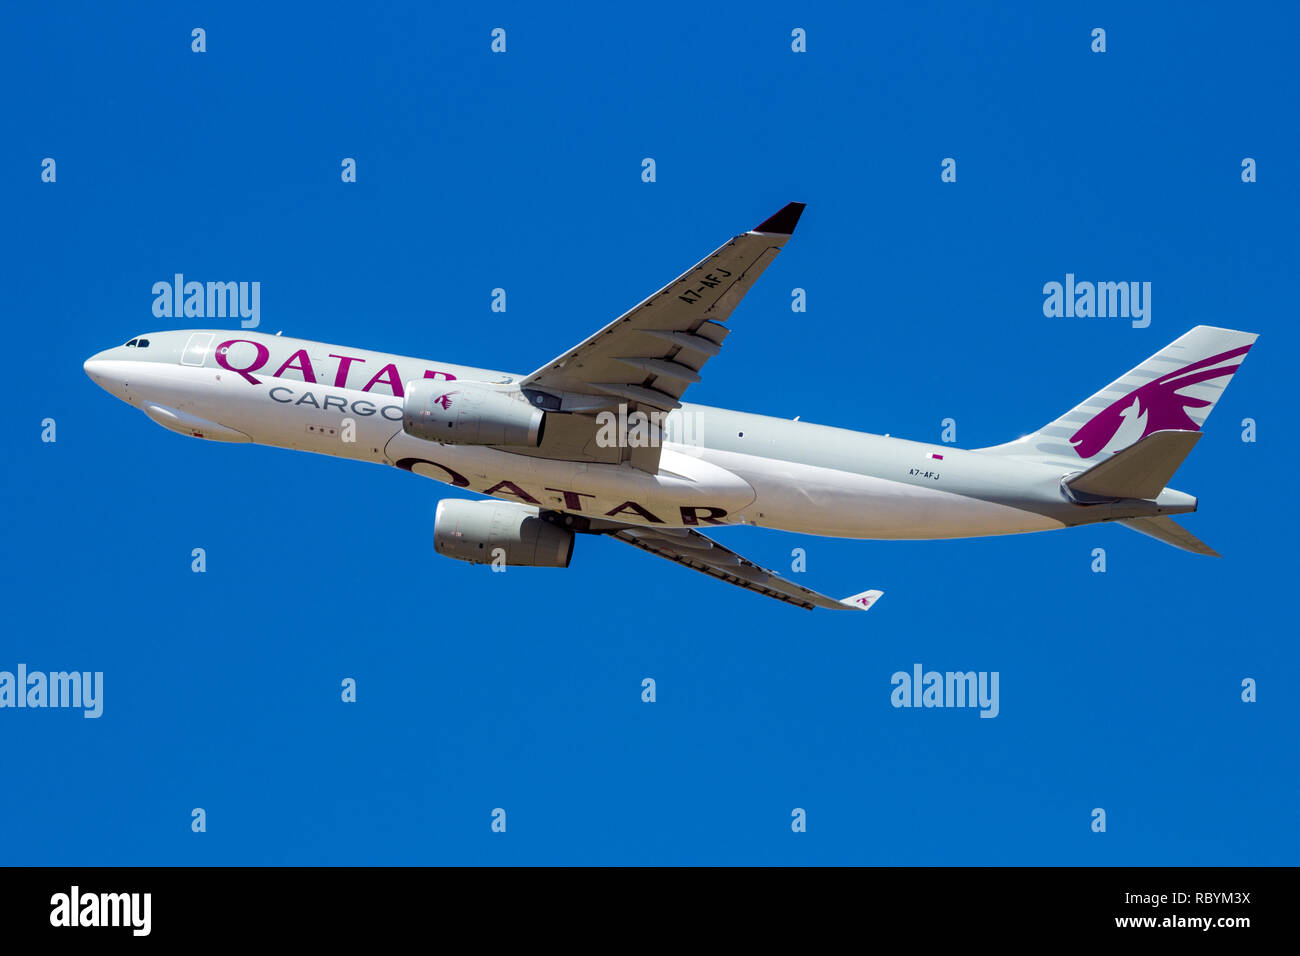 ZARAGOZA, SPAIN - MAY 20, 2016: Qatar Airways Cargo Airbus A330 transport plane taking off from Zaragoza Airport. Stock Photo